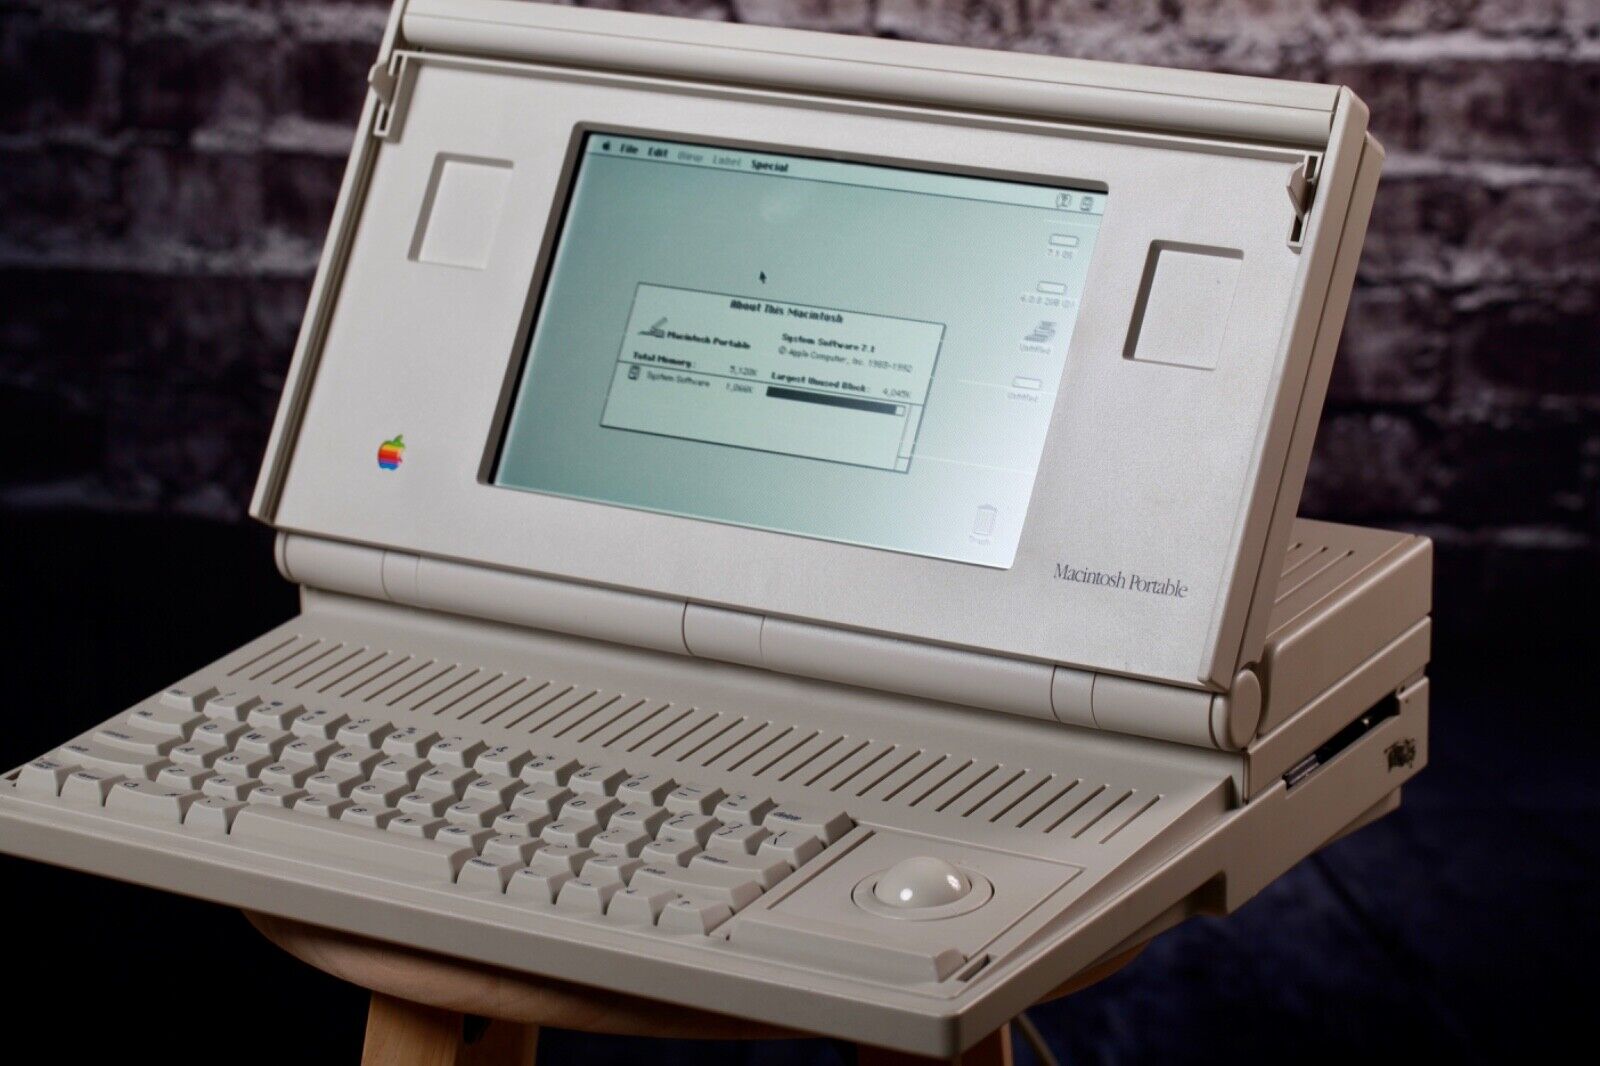 Apple Macintosh Portable M5120 5MB - Recapped & Restored